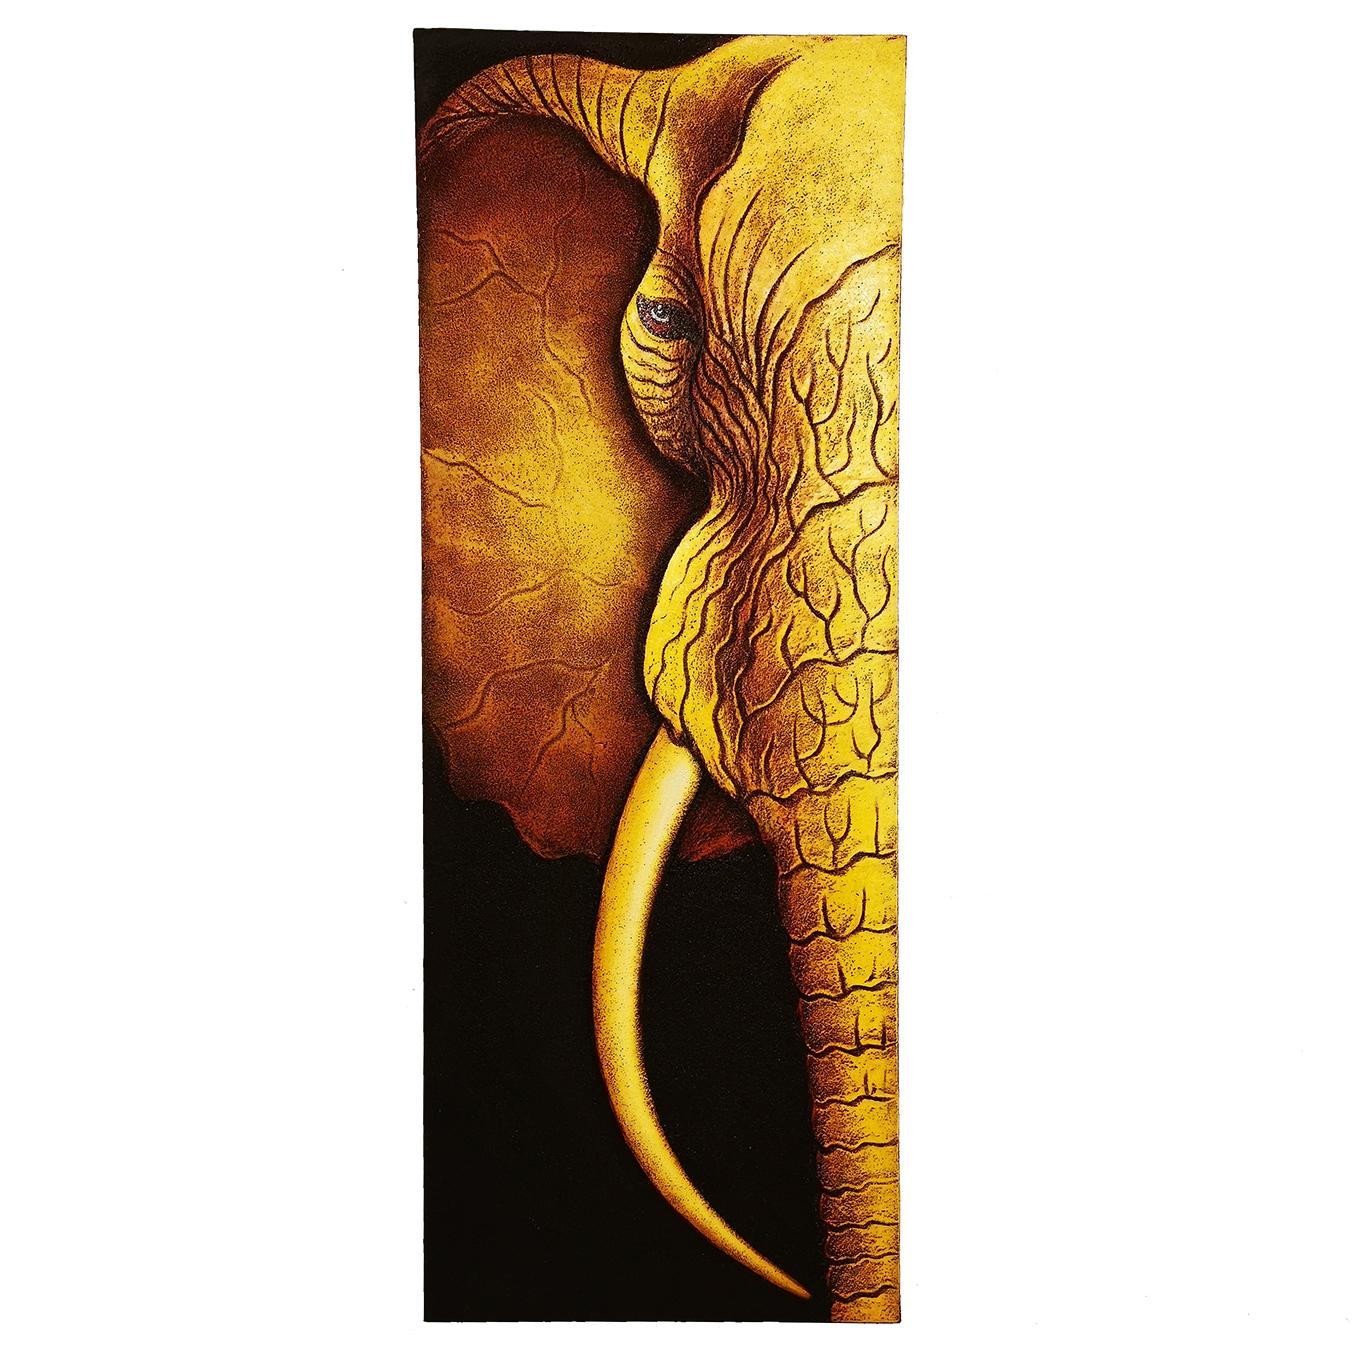 Cuadro de Elefante